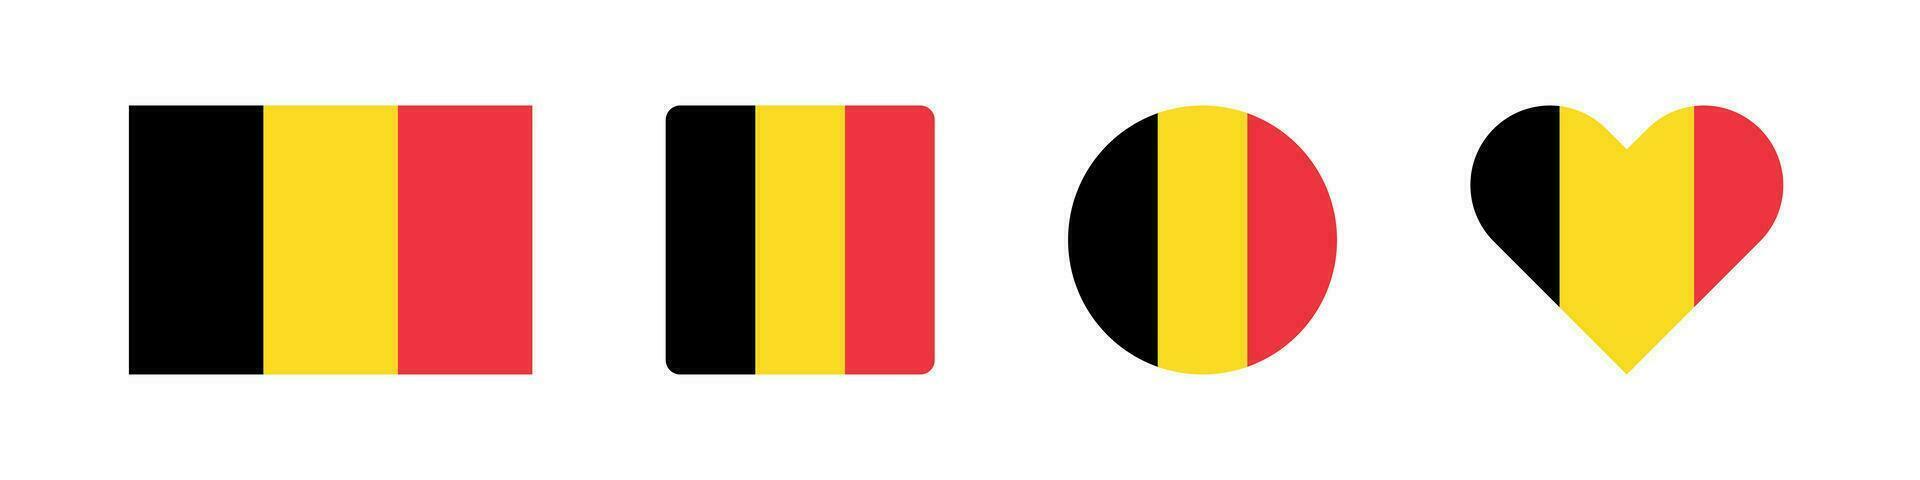 Bélgica icono. Belga bandera señales. nacional Insignia símbolo. Europa país simbolos cultura pegatina iconos vector aislado signo.